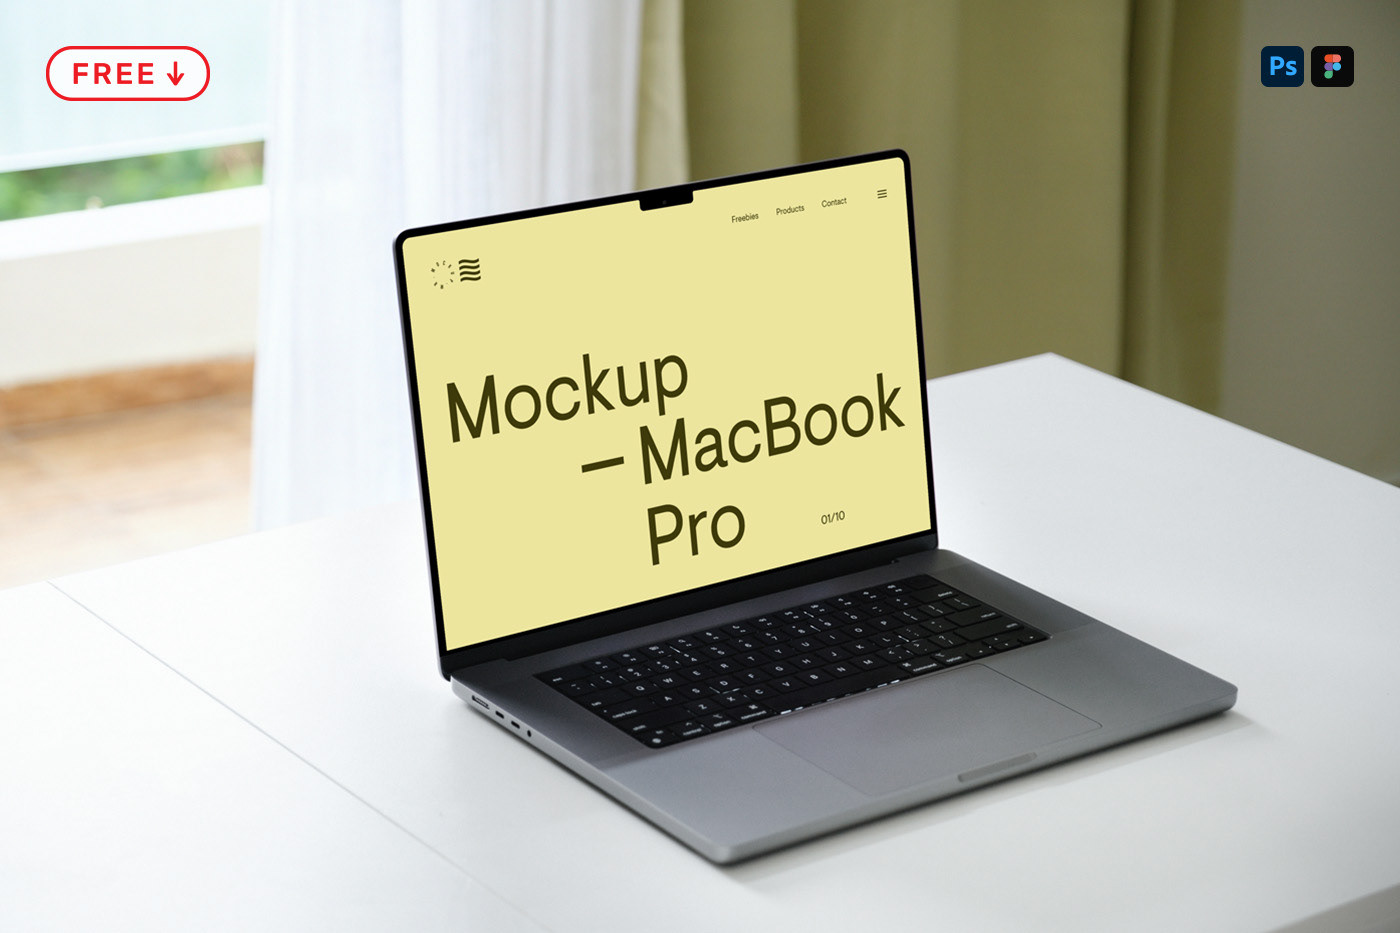 free free mockup  free macbook mockup free download psd Free Template macbook pro mockup free device mockup free mac mockup FREE UIUX MOCKUP